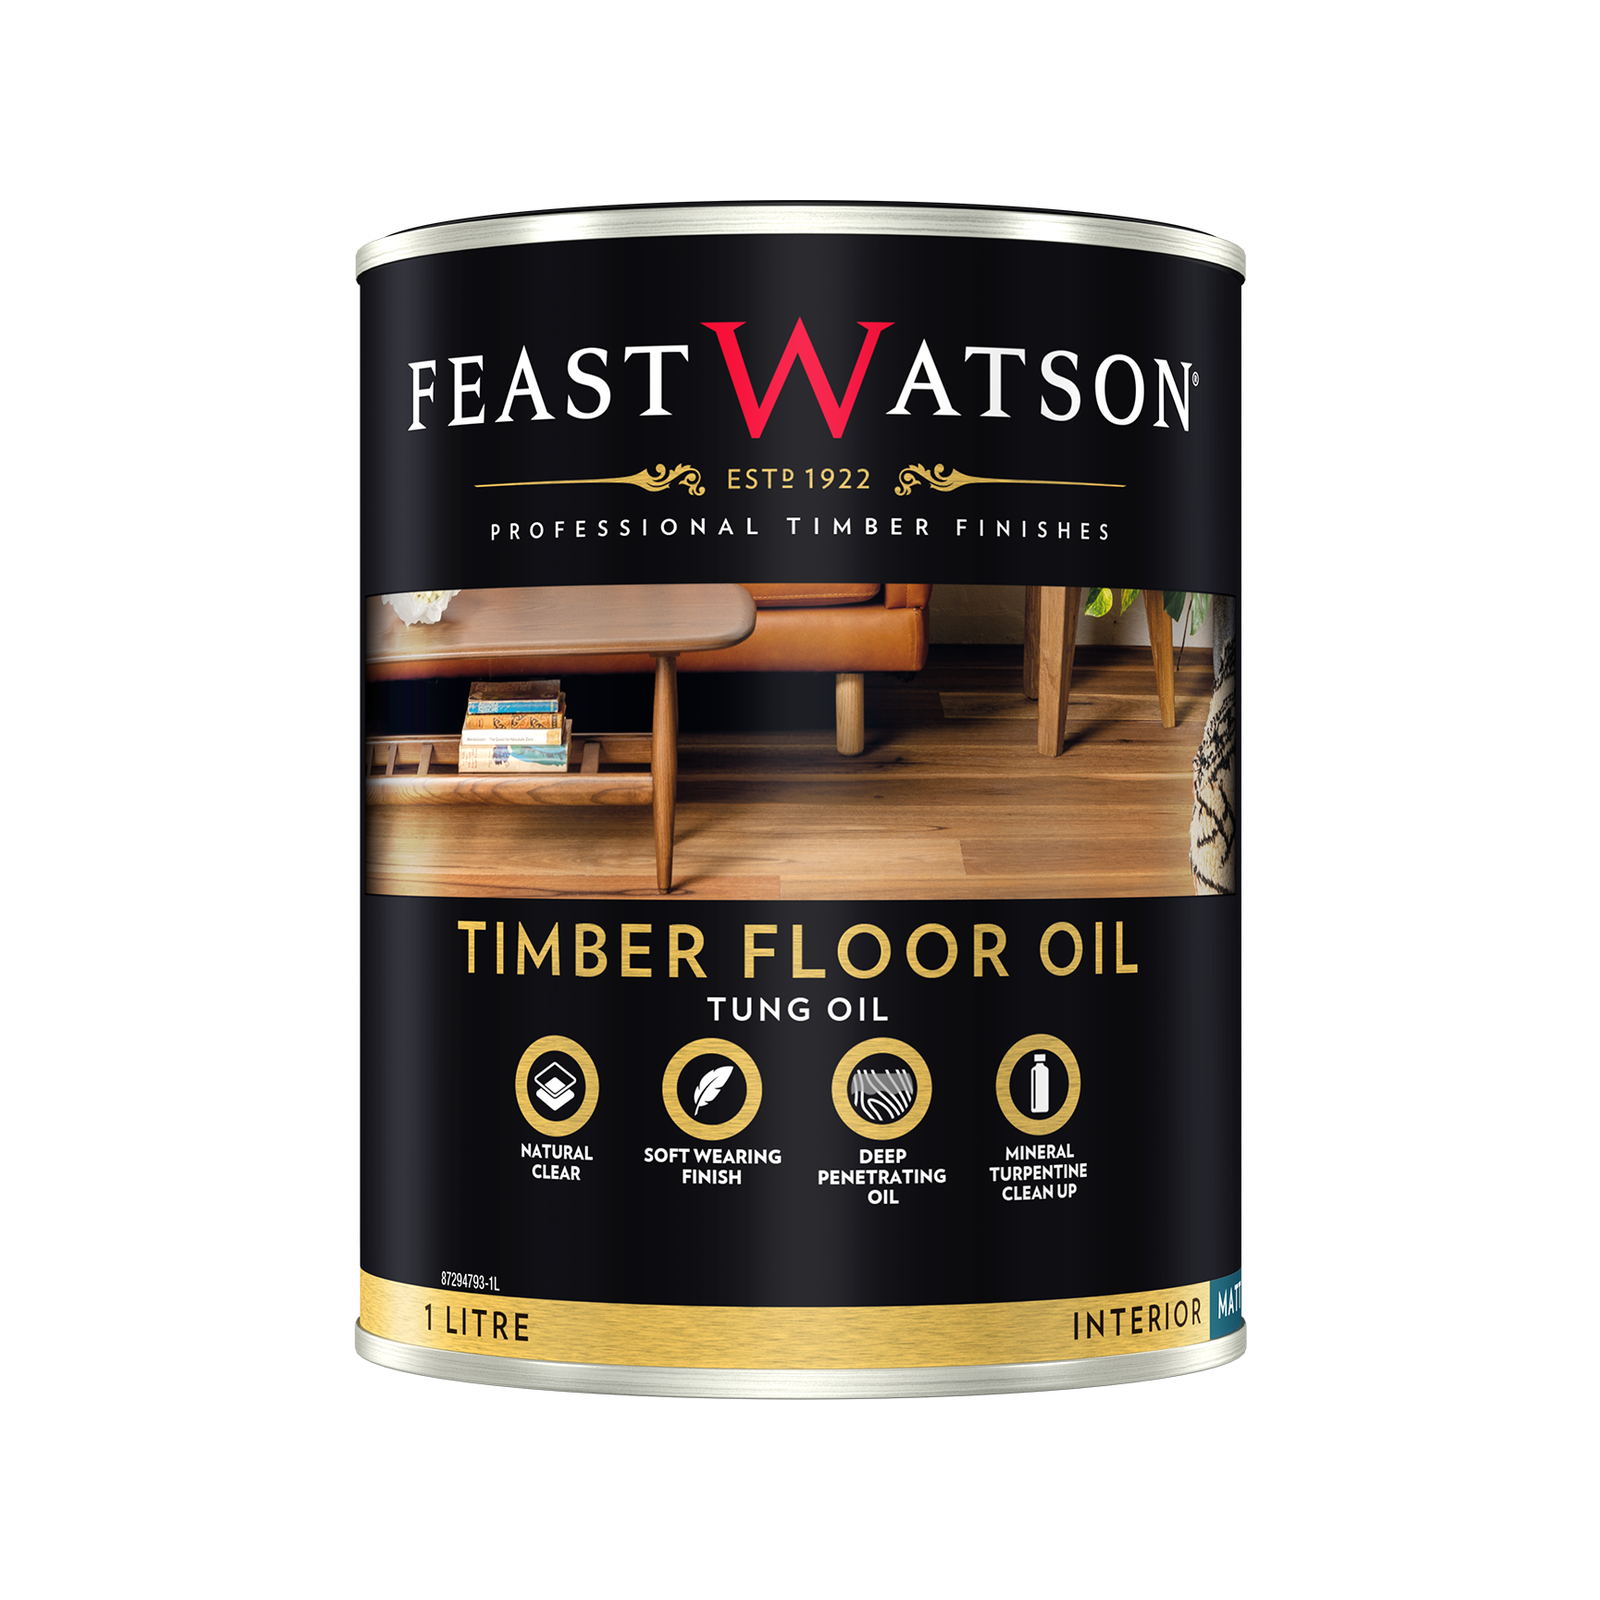 Premium Hard Wax  Timber Furniture Wax - Feast Watson NZ